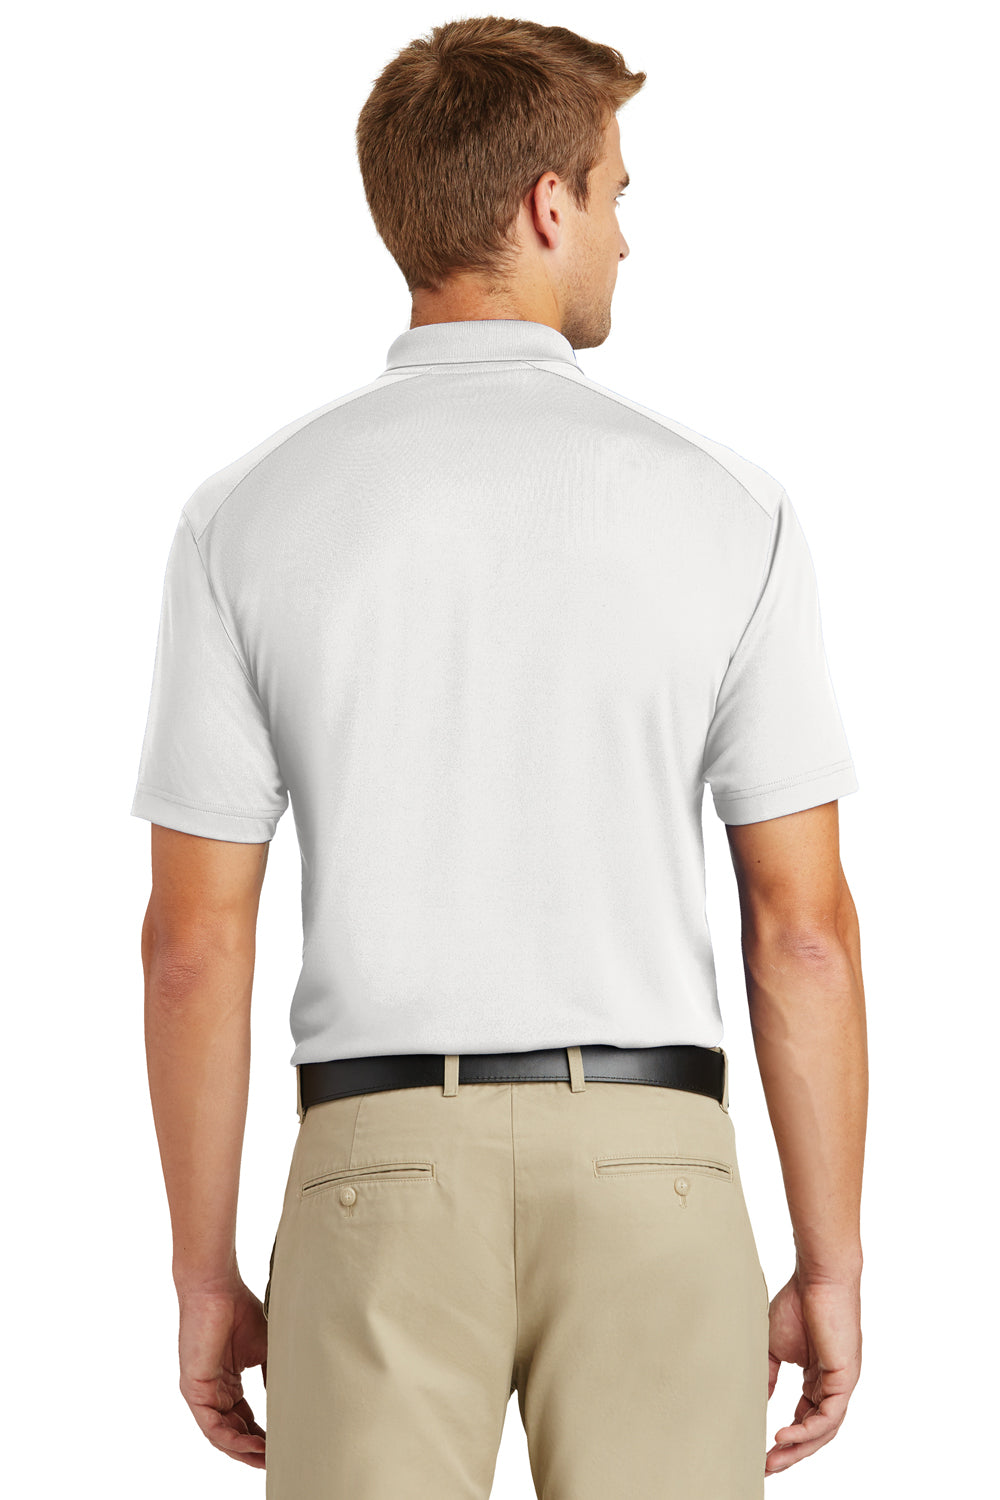 CornerStone CS418 Mens Select Moisture Wicking Short Sleeve Polo Shirt White Back